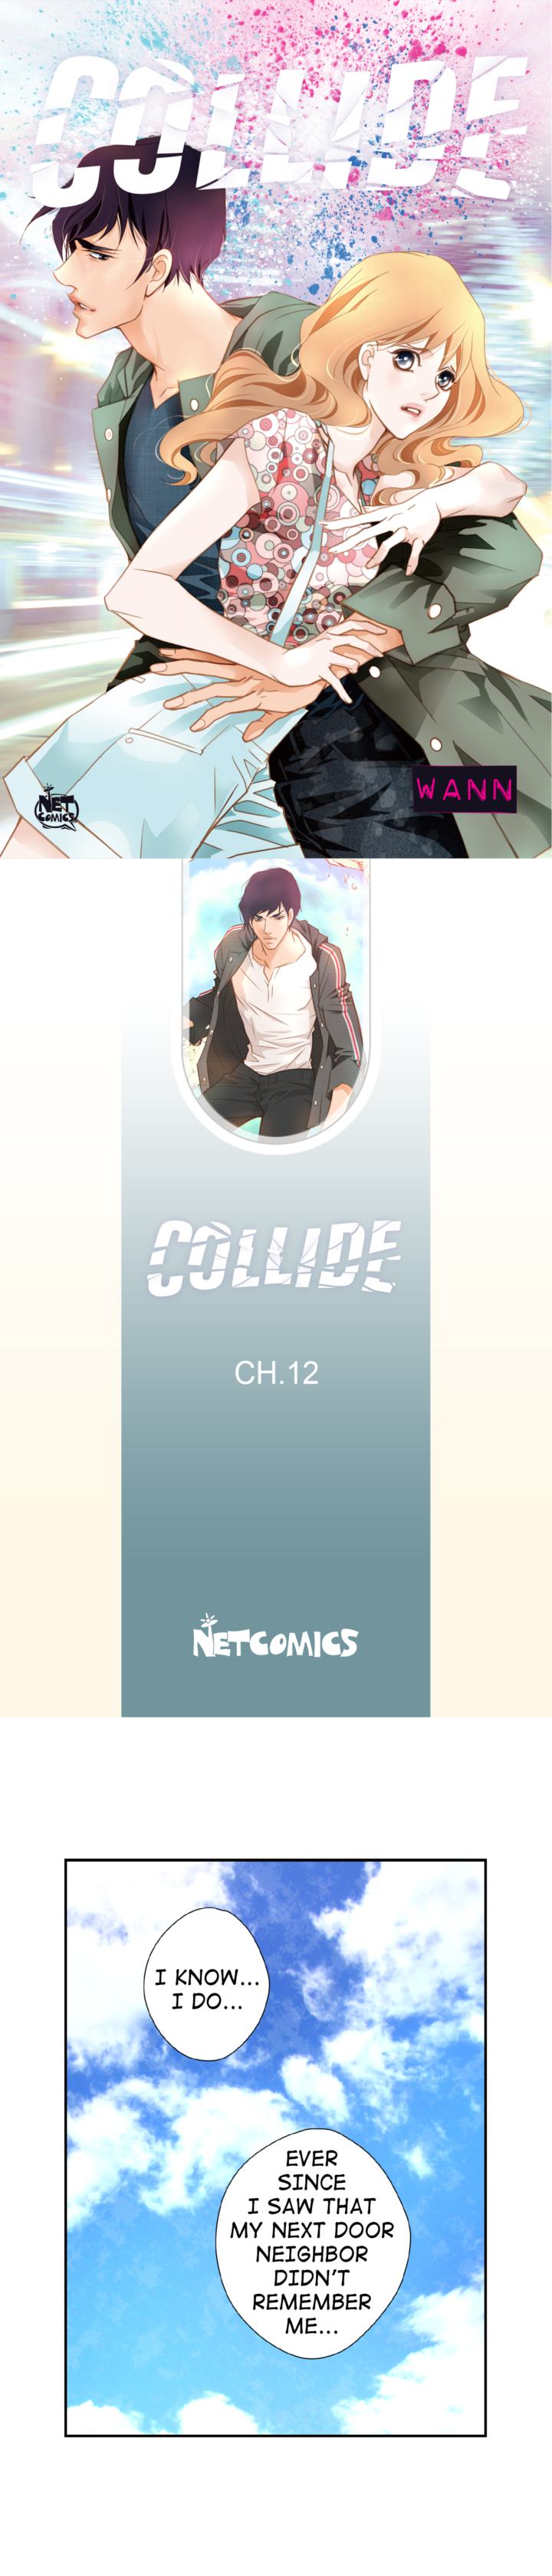 Collide Ch.12